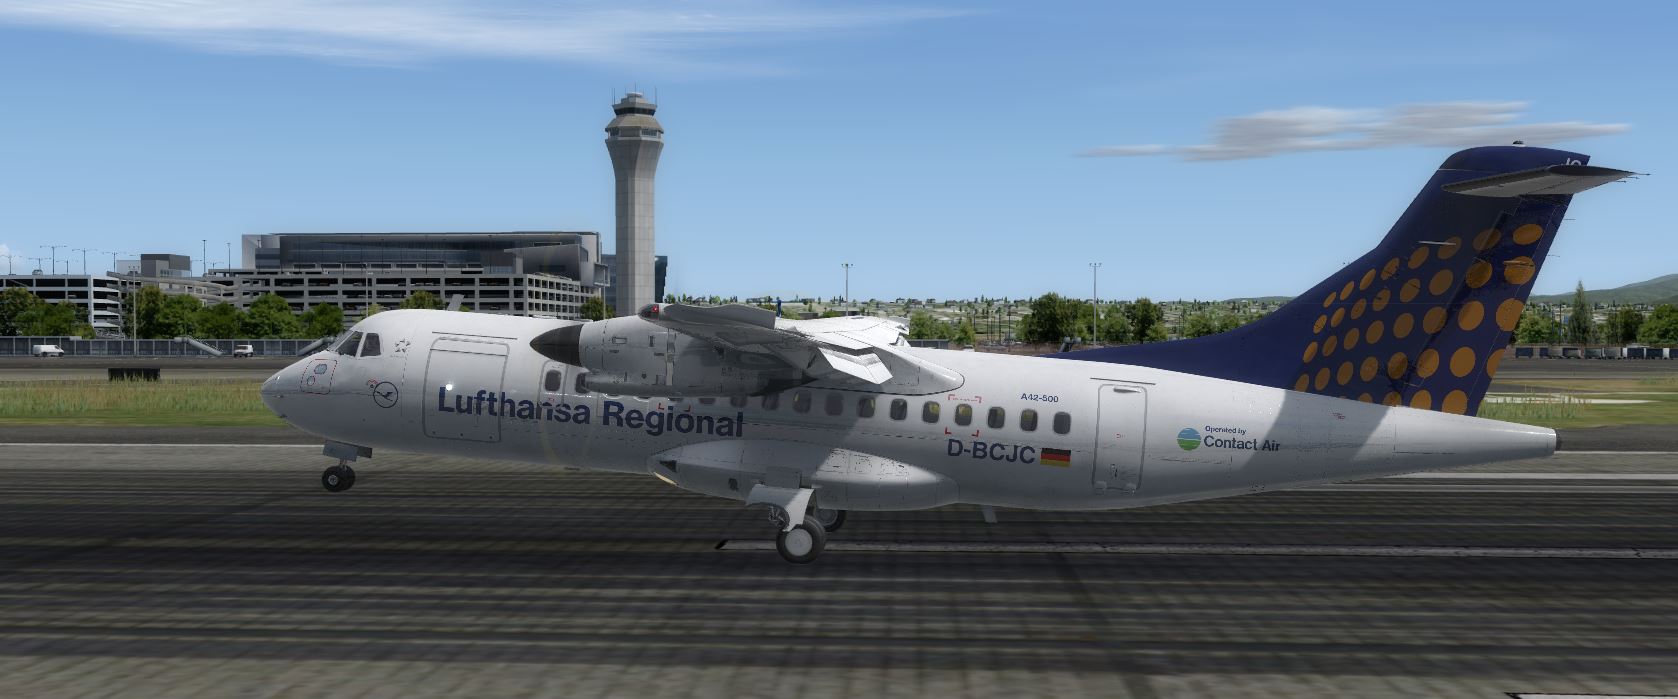 ATR42-500 Lufthansa-7007 